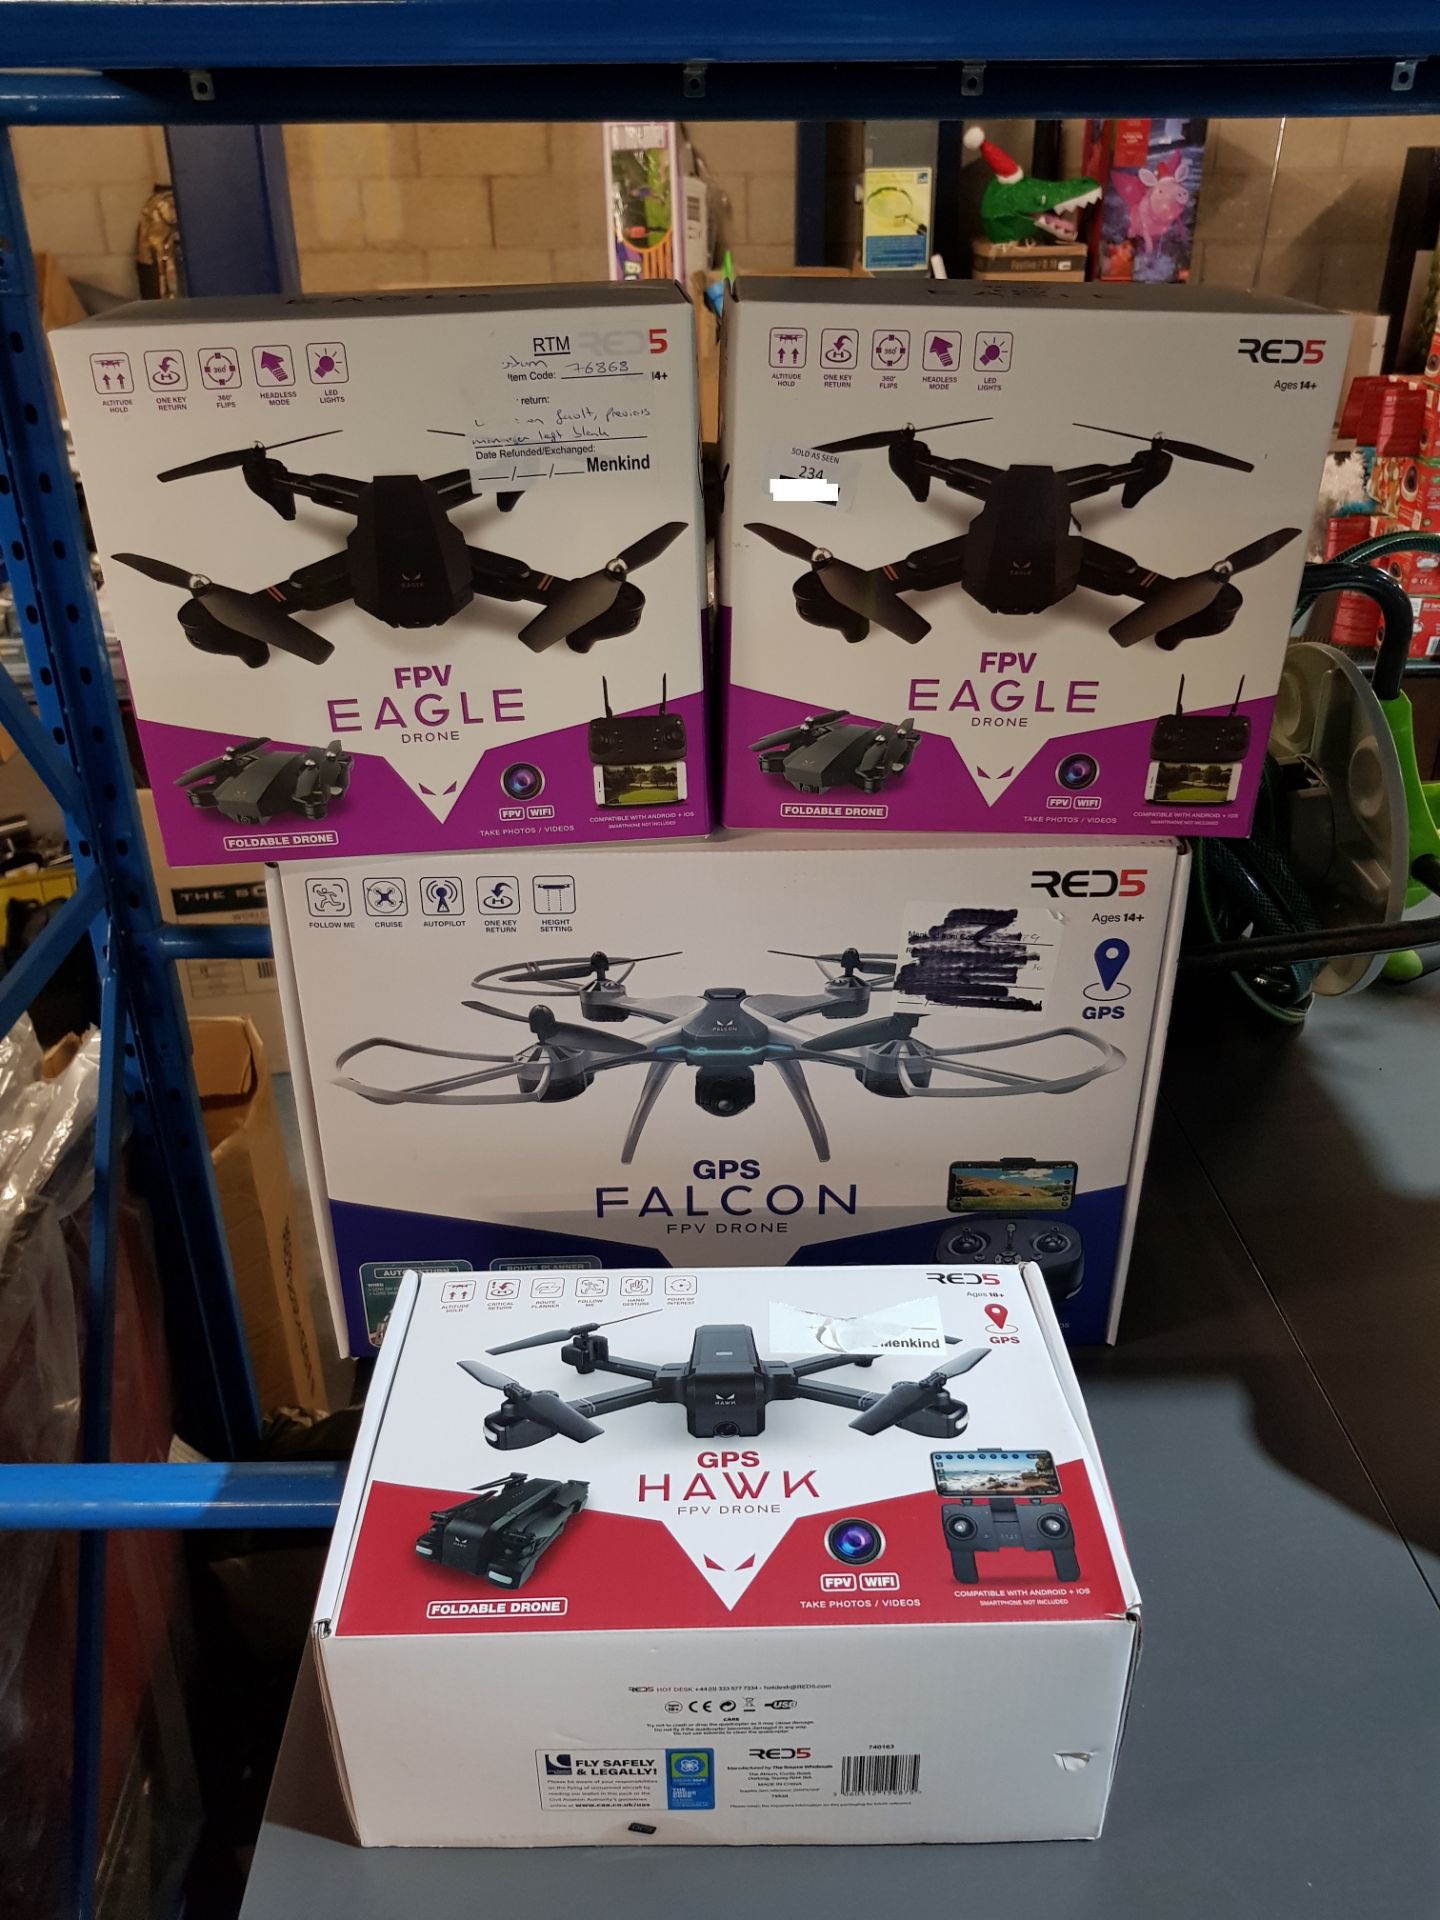 4 Items Ð 2 X Red5 FPV Eagle Drone, 1 X Red5 GPS Hawk FPV Drone & 1 X Red5 GPS Falcon FPV Drone